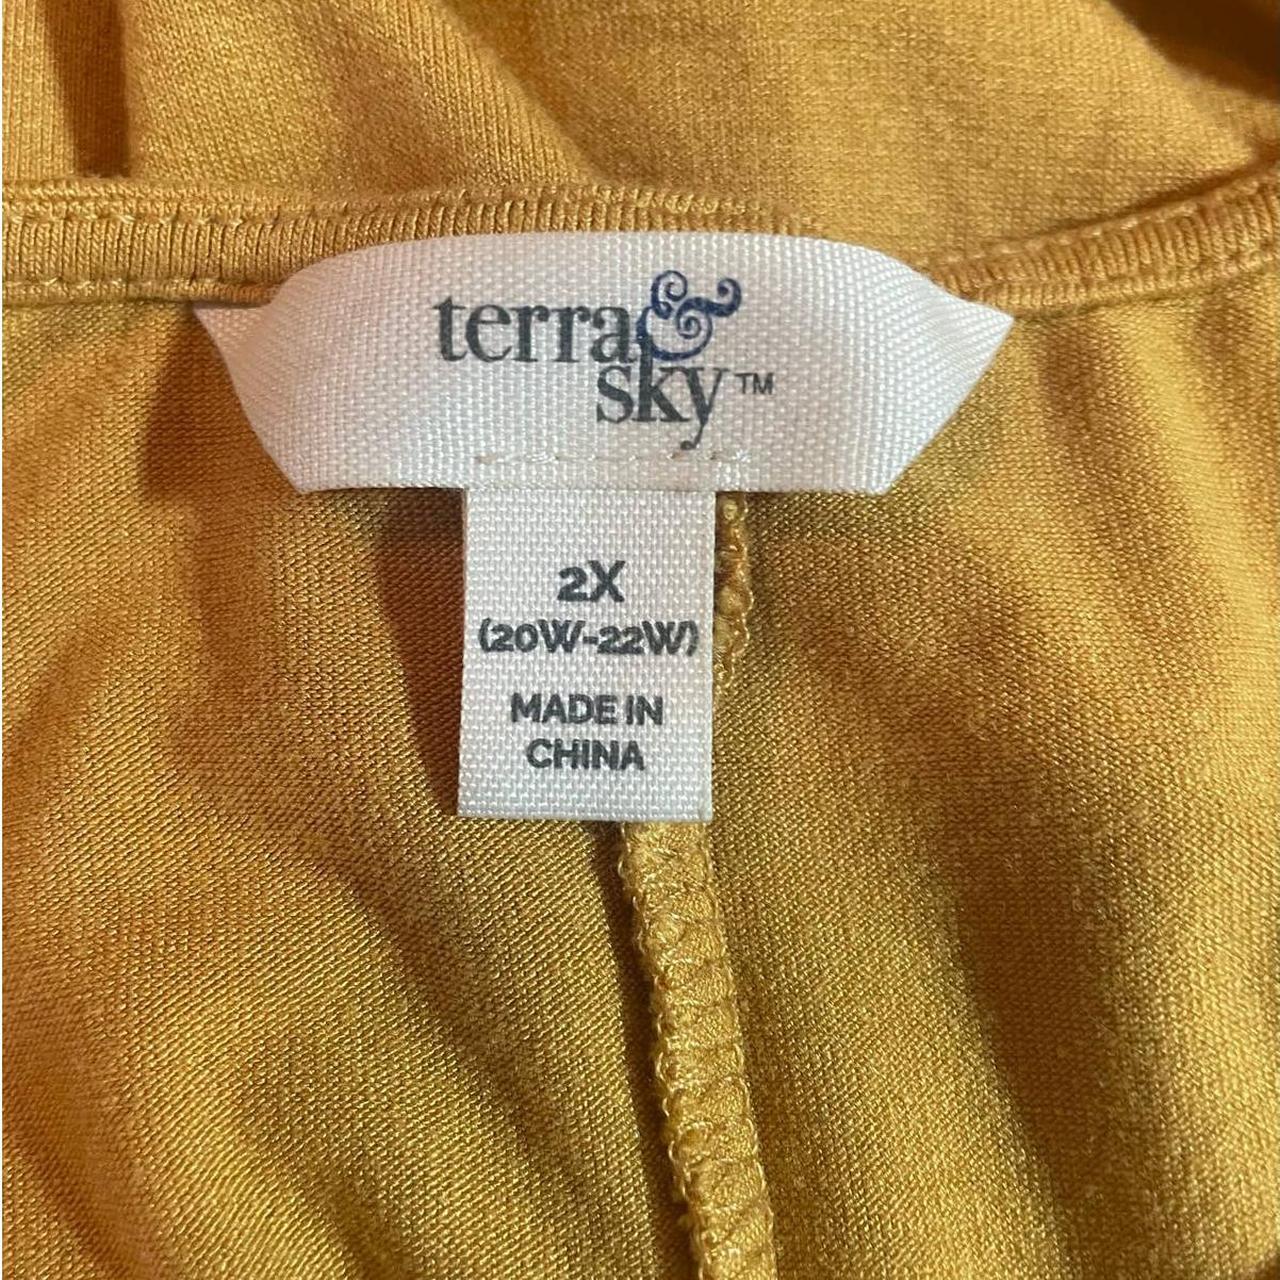 Terra & Sky Woman's Short Sleeve Top Size 2X (20W-22W